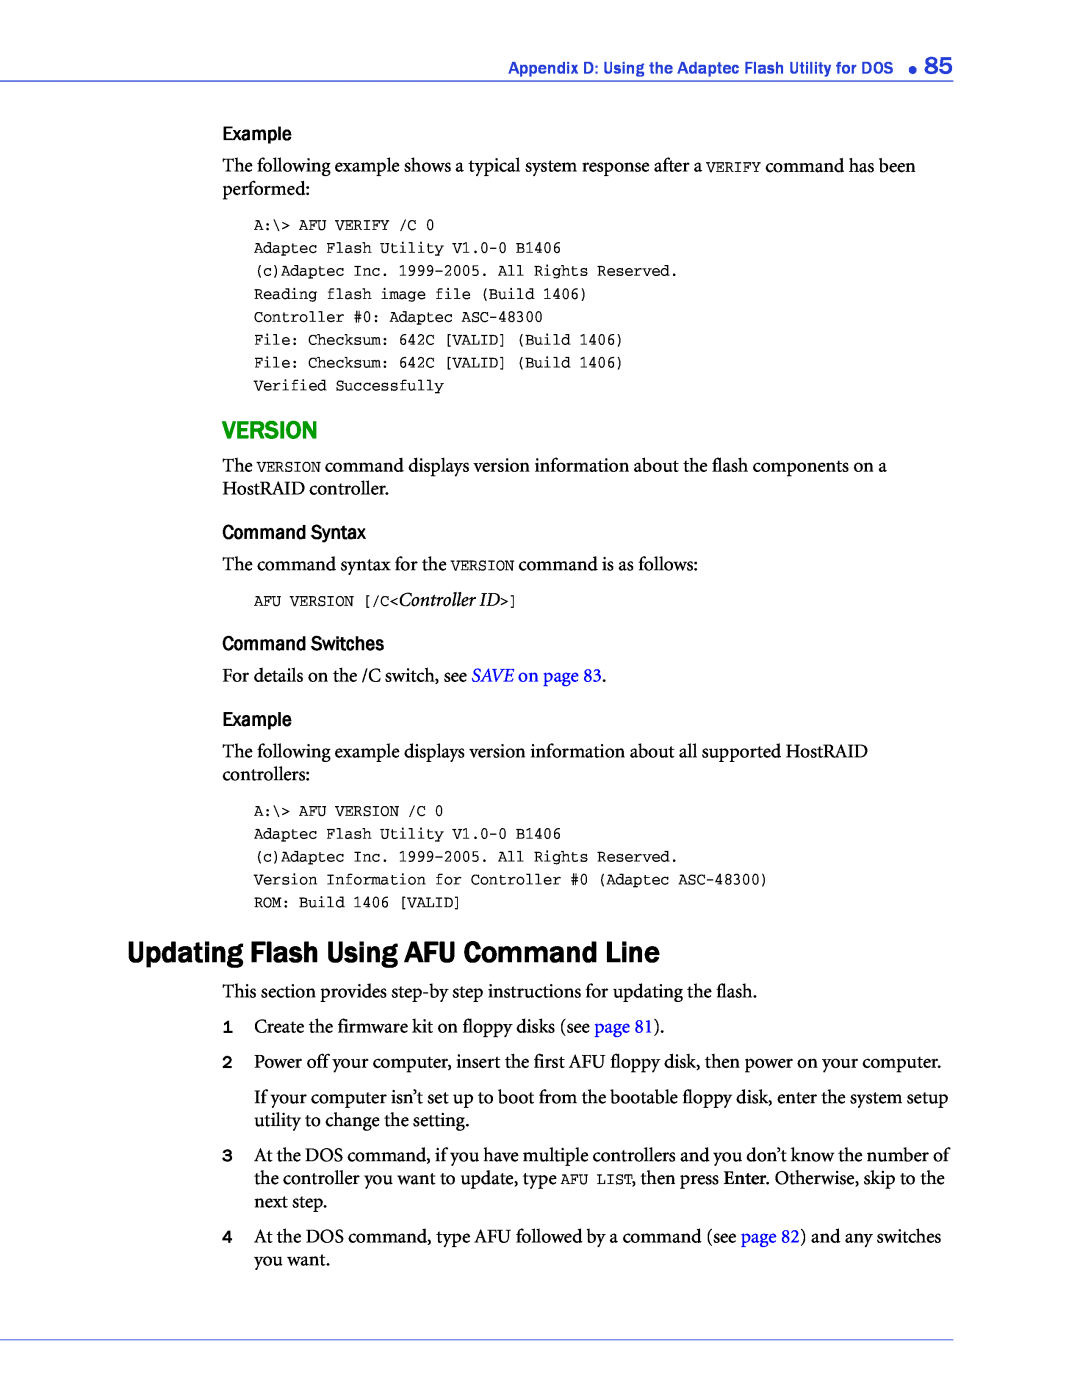 Adaptec 58300, 44300, 48300, 1220SA, 1420SA, 1225SA, 1430SA manual Updating Flash Using AFU Command Line, Version 